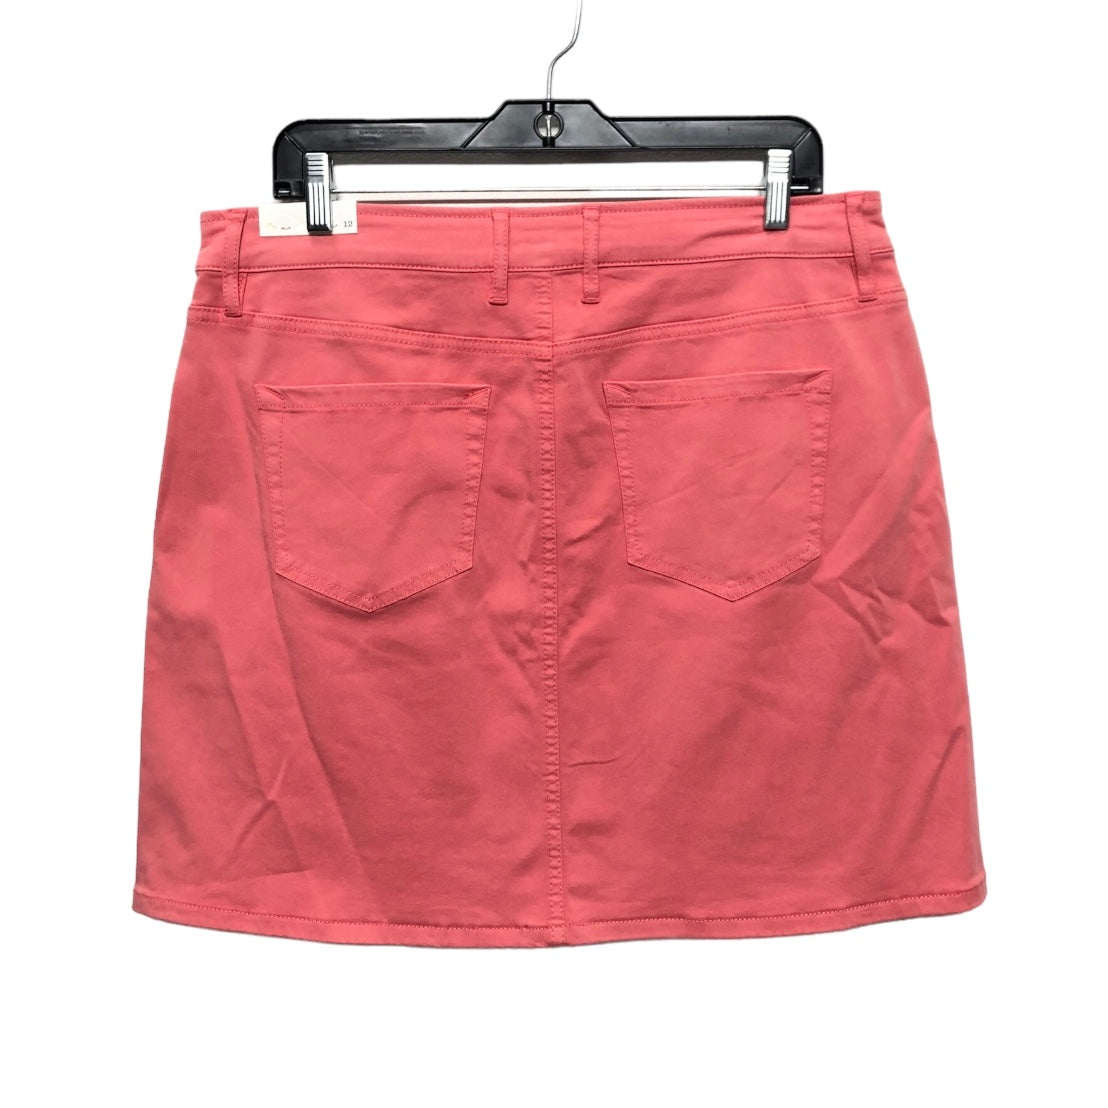 Coral Skirt Mini & Short Tommy Bahama, Size 12